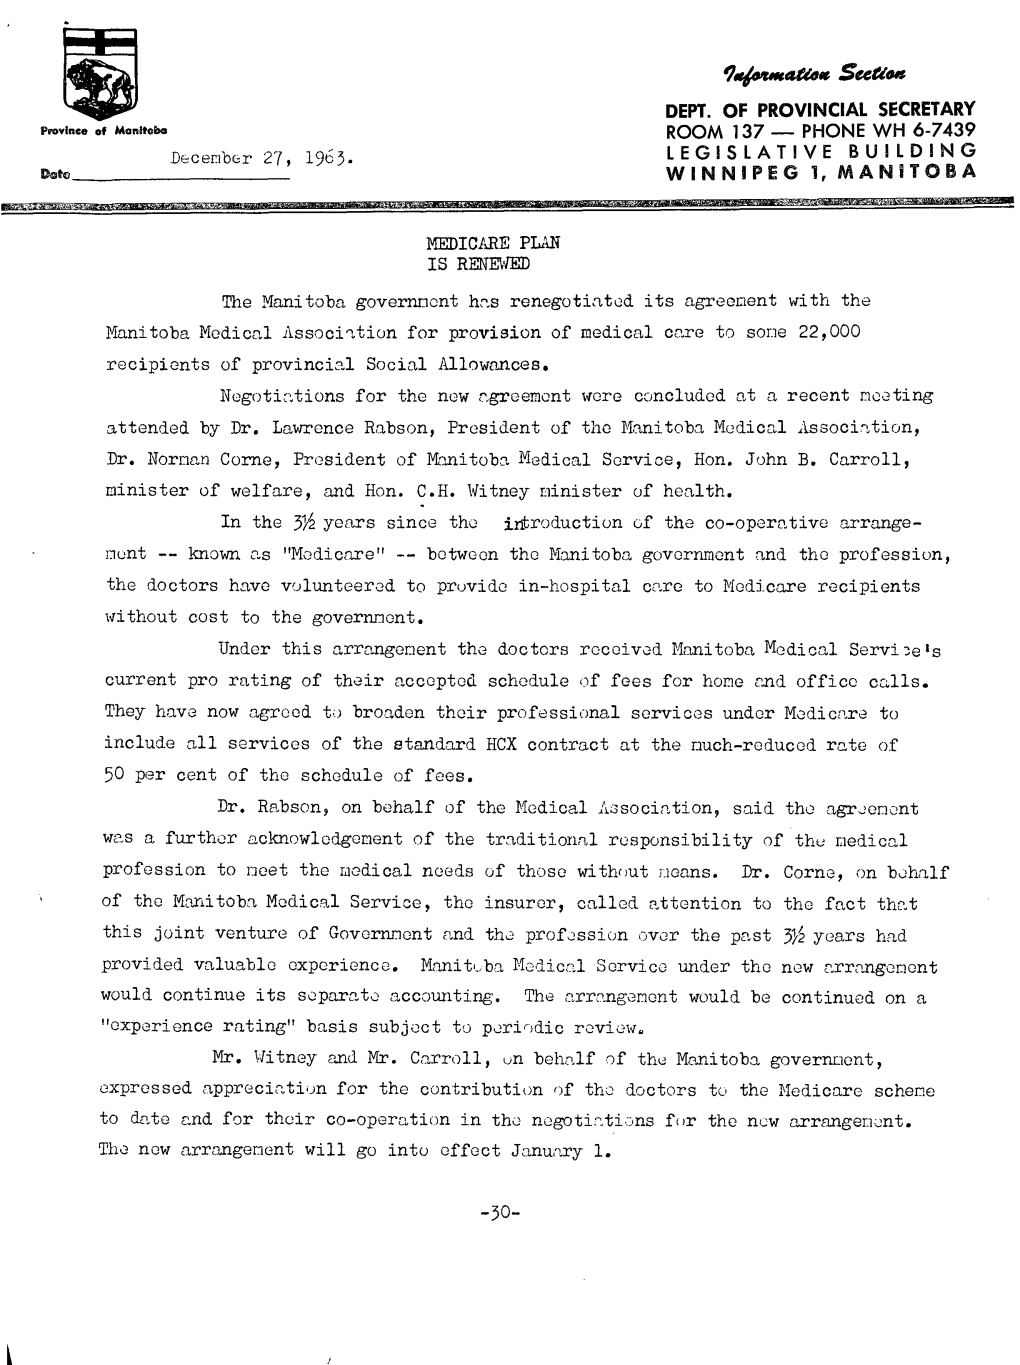 December 27, 1963. MEDICARE PLAN IS RENEWED the Manitoba